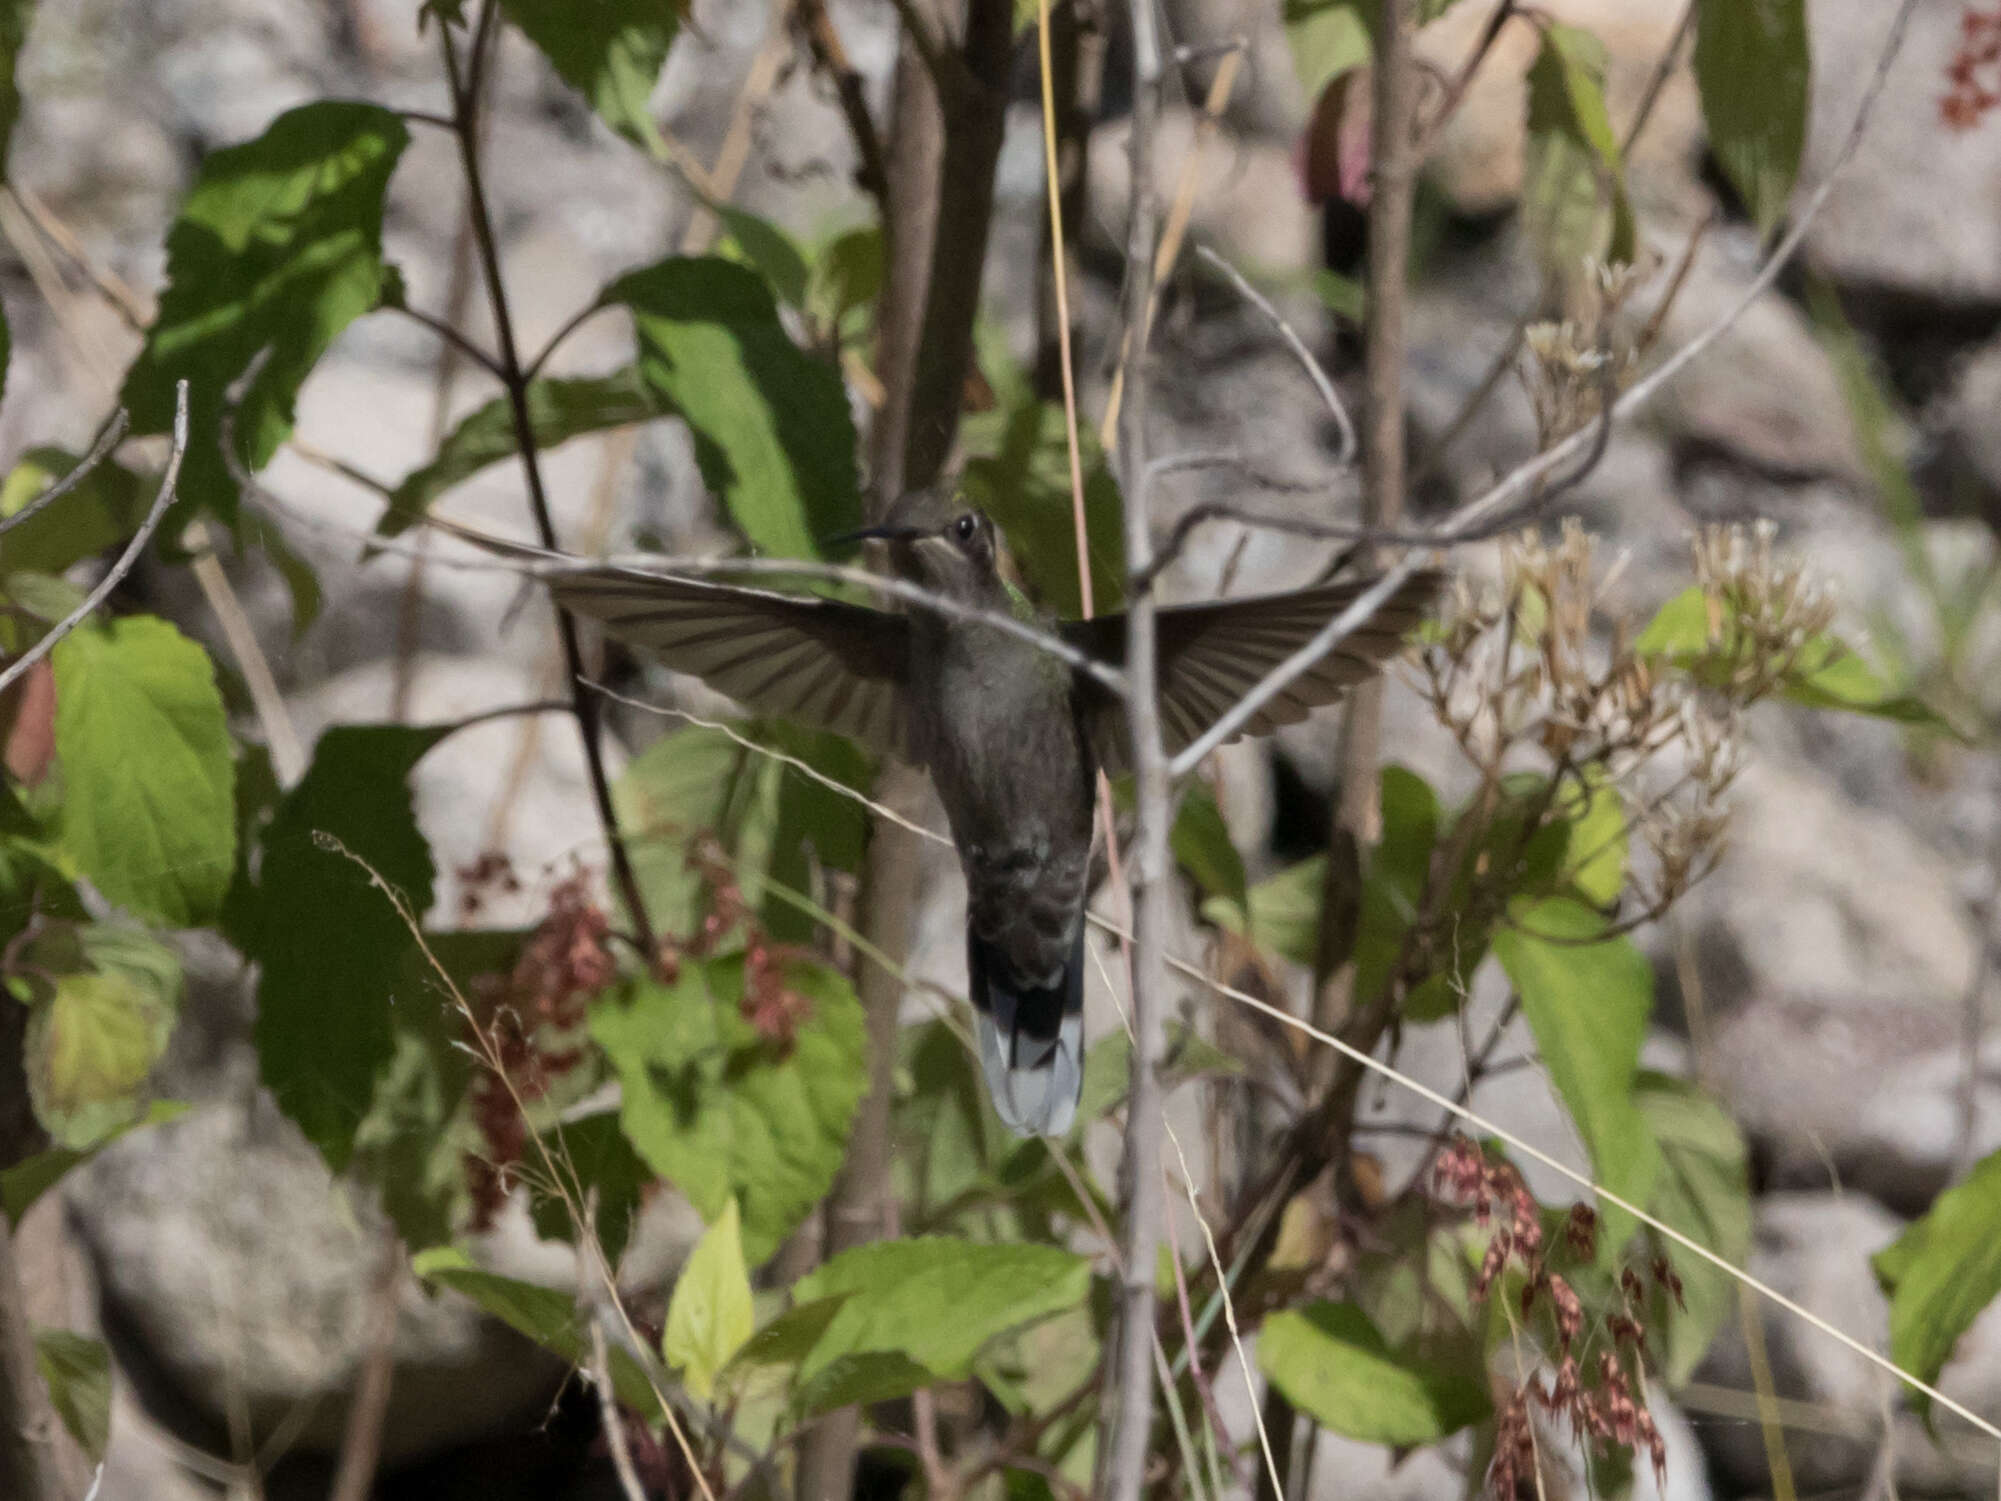 Image of Blue-throated Hummingbird